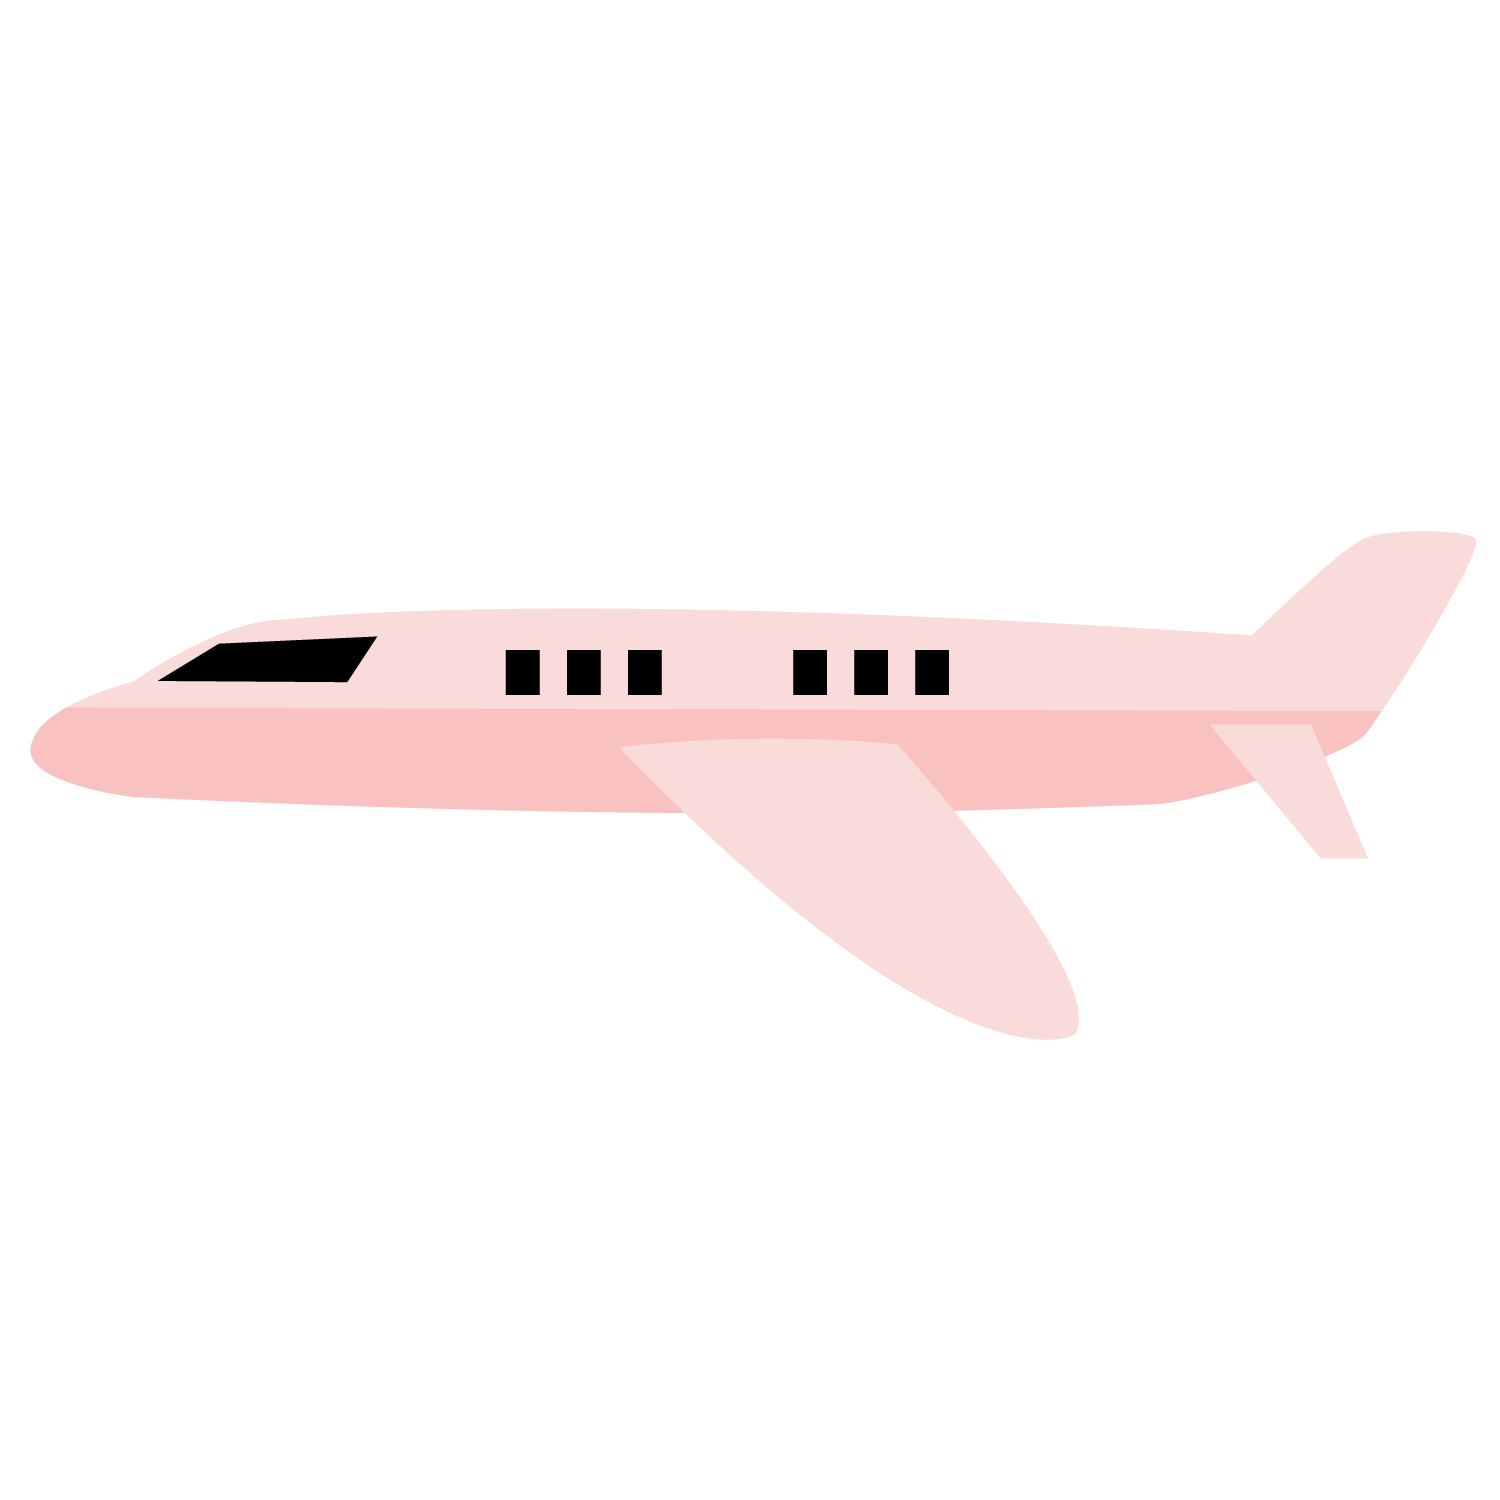 Airplane profile